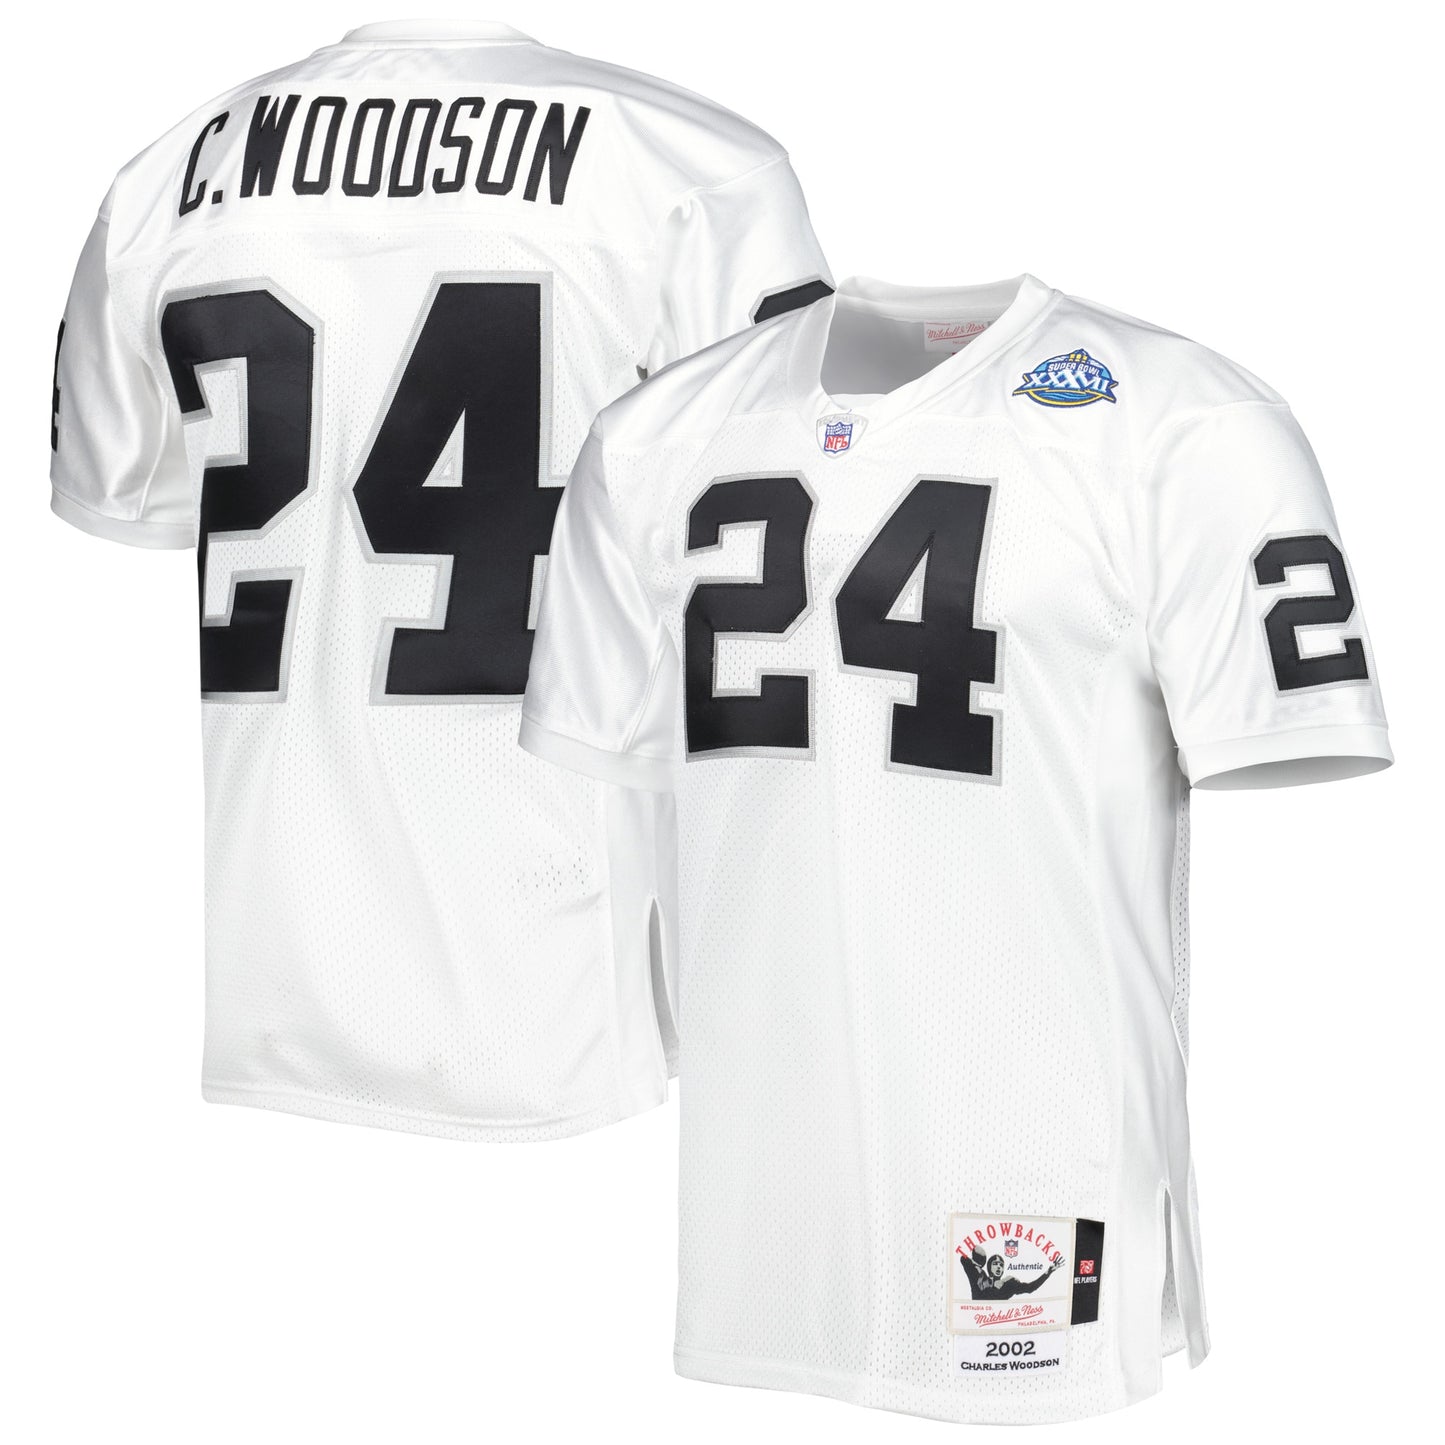 Charles Woodson Las Vegas Raiders Mitchell & Ness 2002 Super Bowl XXXVII Authentic Retired Player Jersey - White